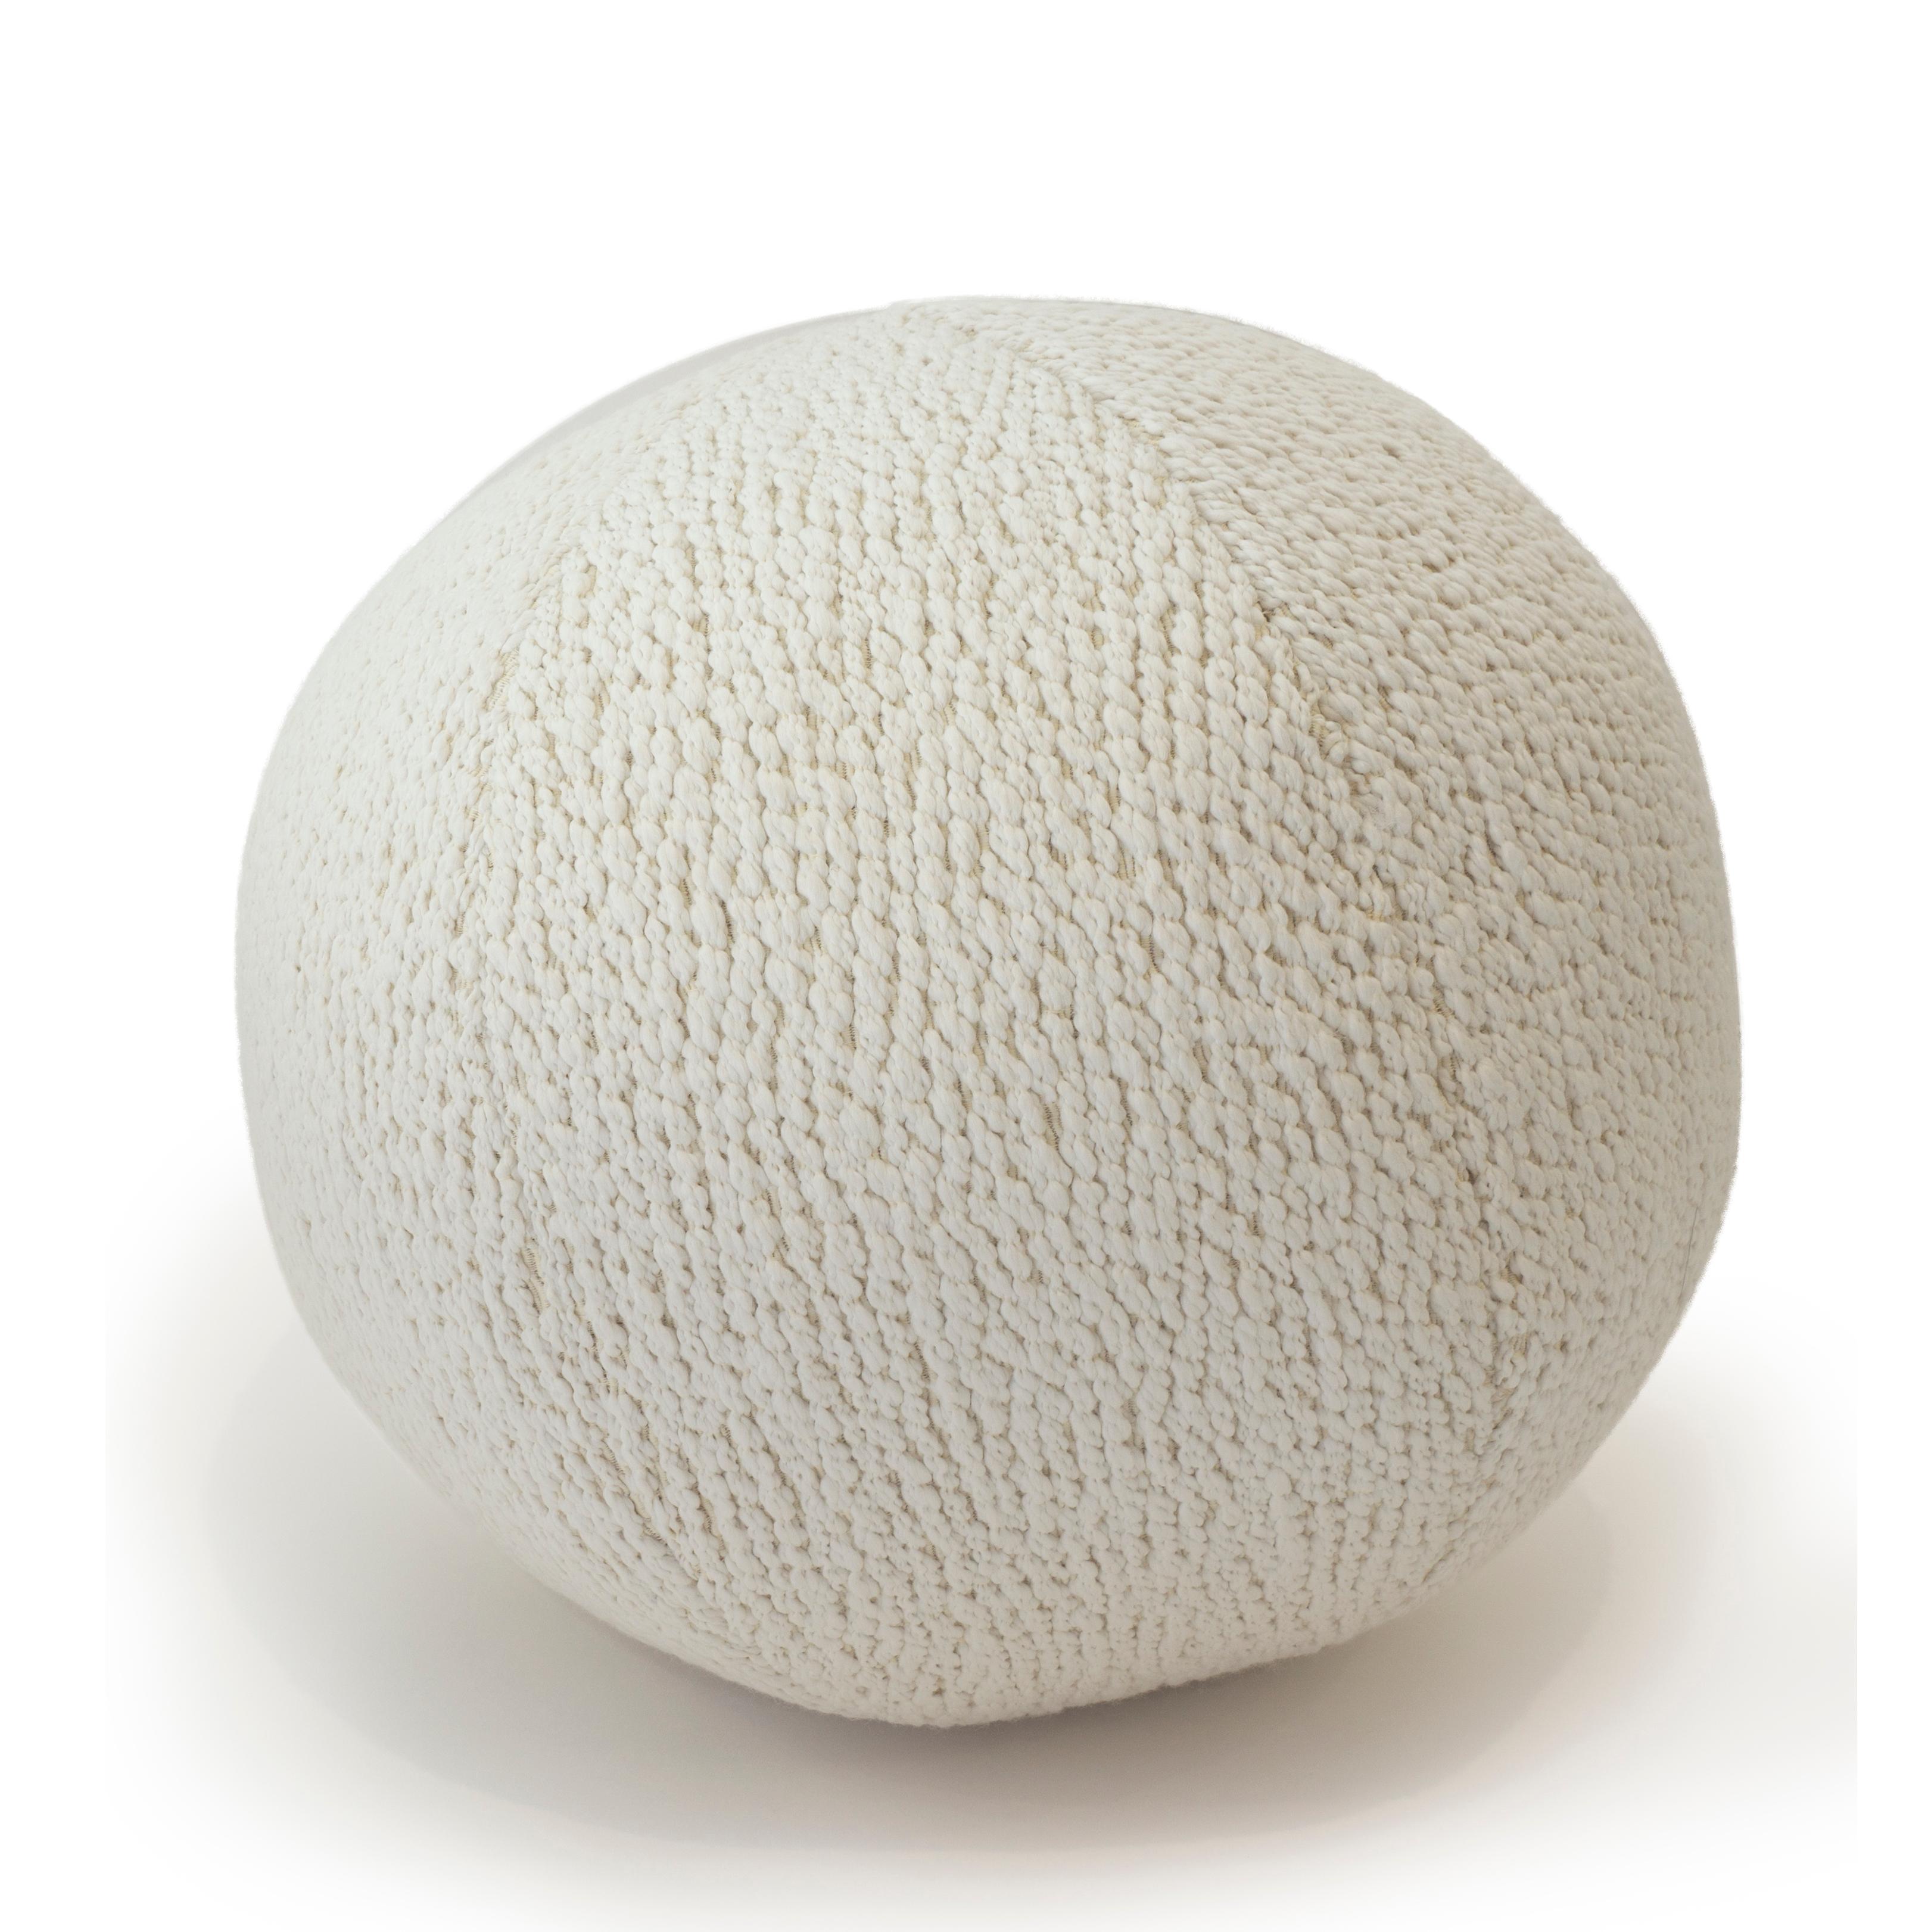 American Cream and White Braided Wool Ball Pillow